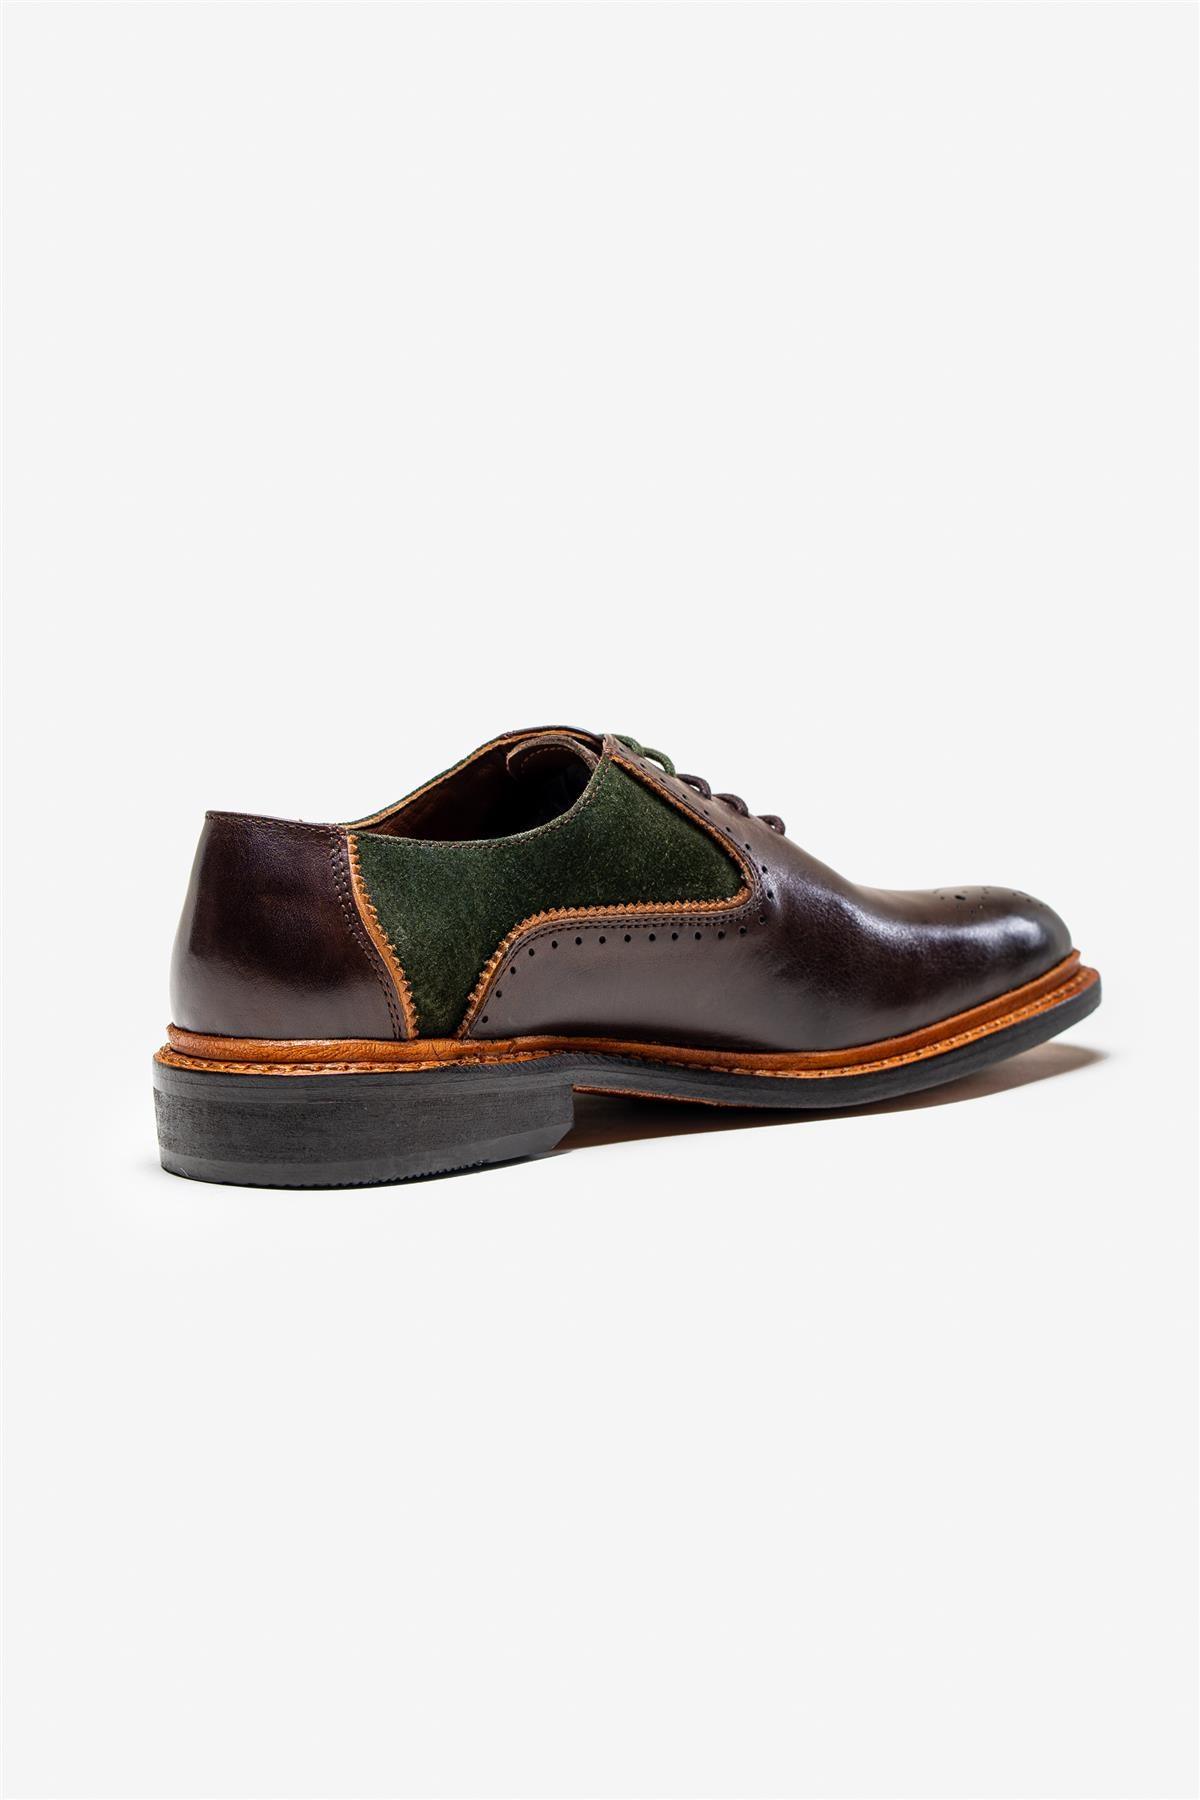 Brentwood brown/olive shoes back